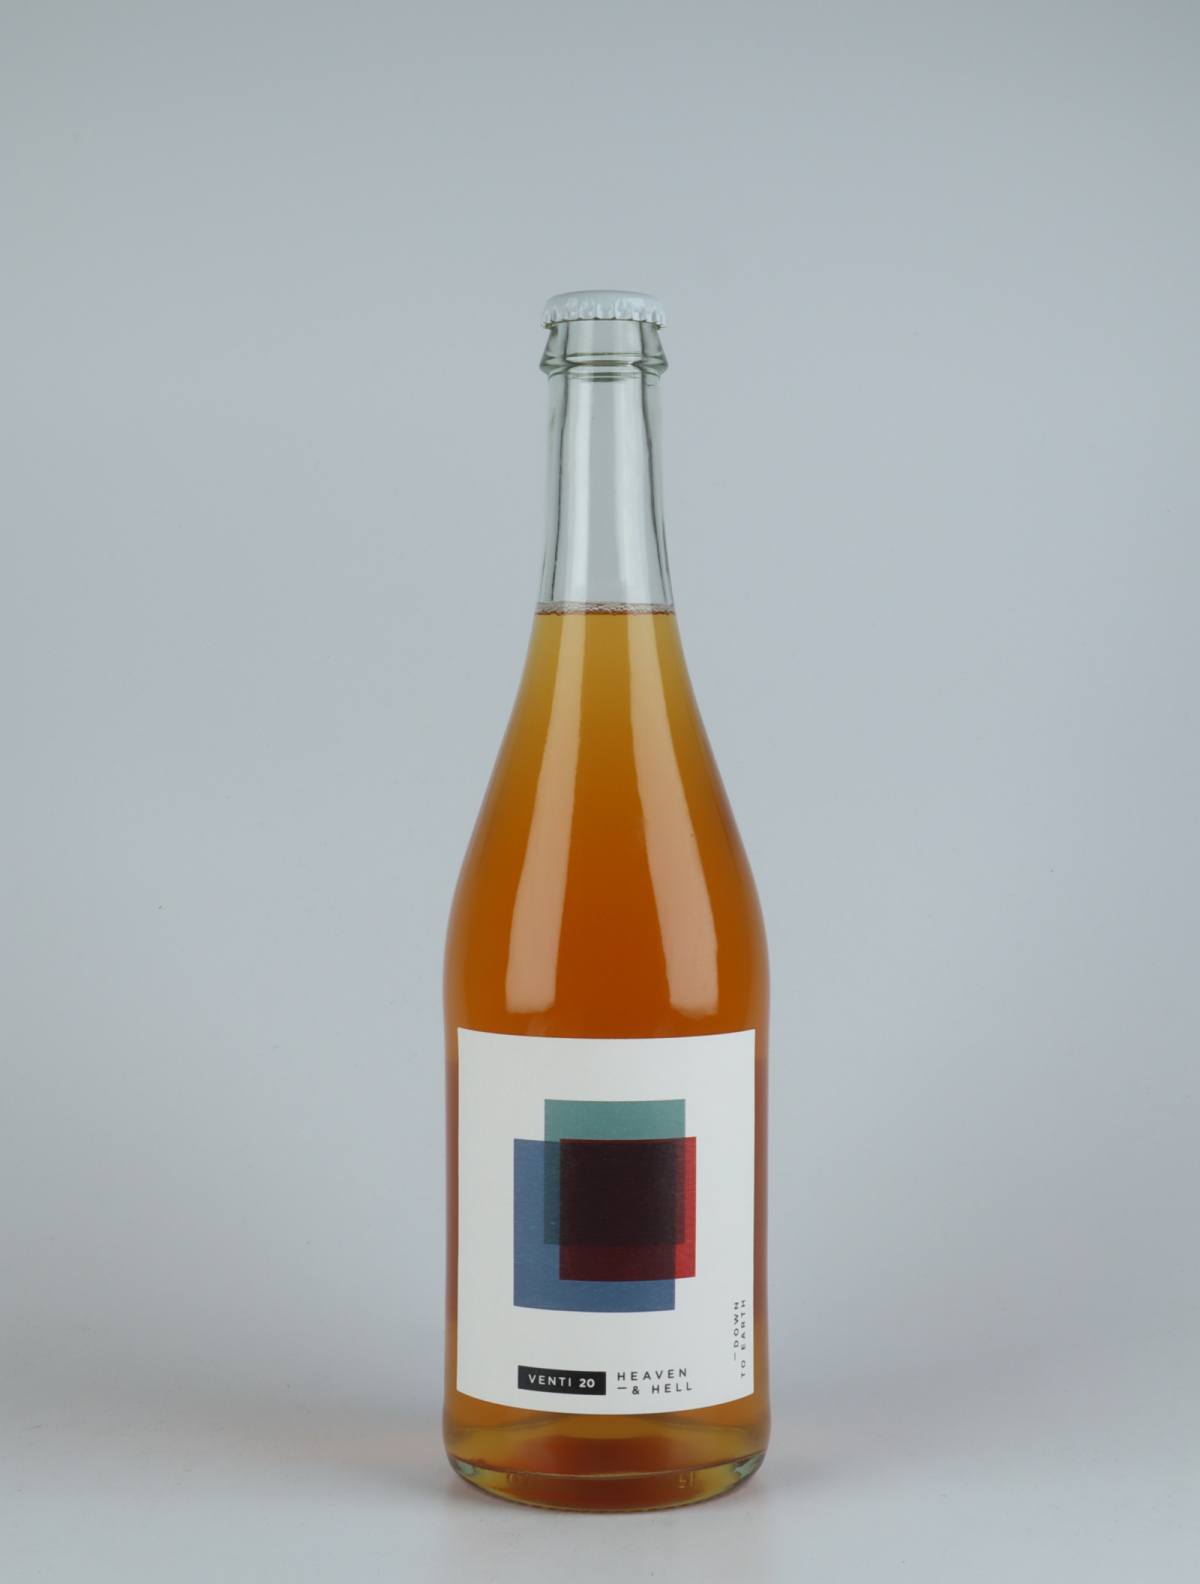 A bottle 2020 Heaven & Hell Orange wine from do.t.e Vini, Tuscany in Italy